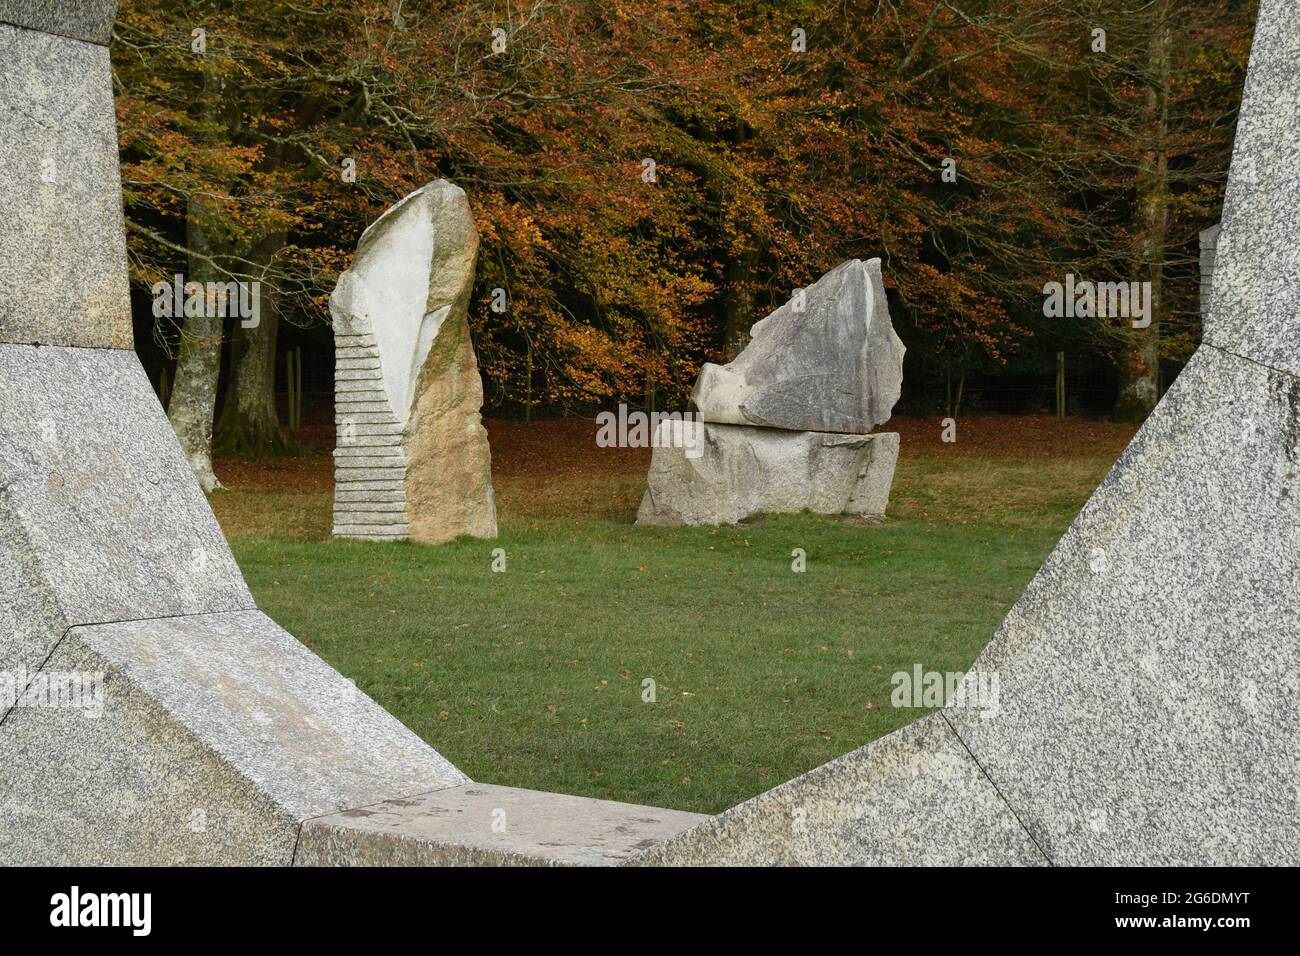 Stones in piedi in autunno a Heavens gate, che domina Longleat House, Longleat, Wiltshire, UK Foto Stock